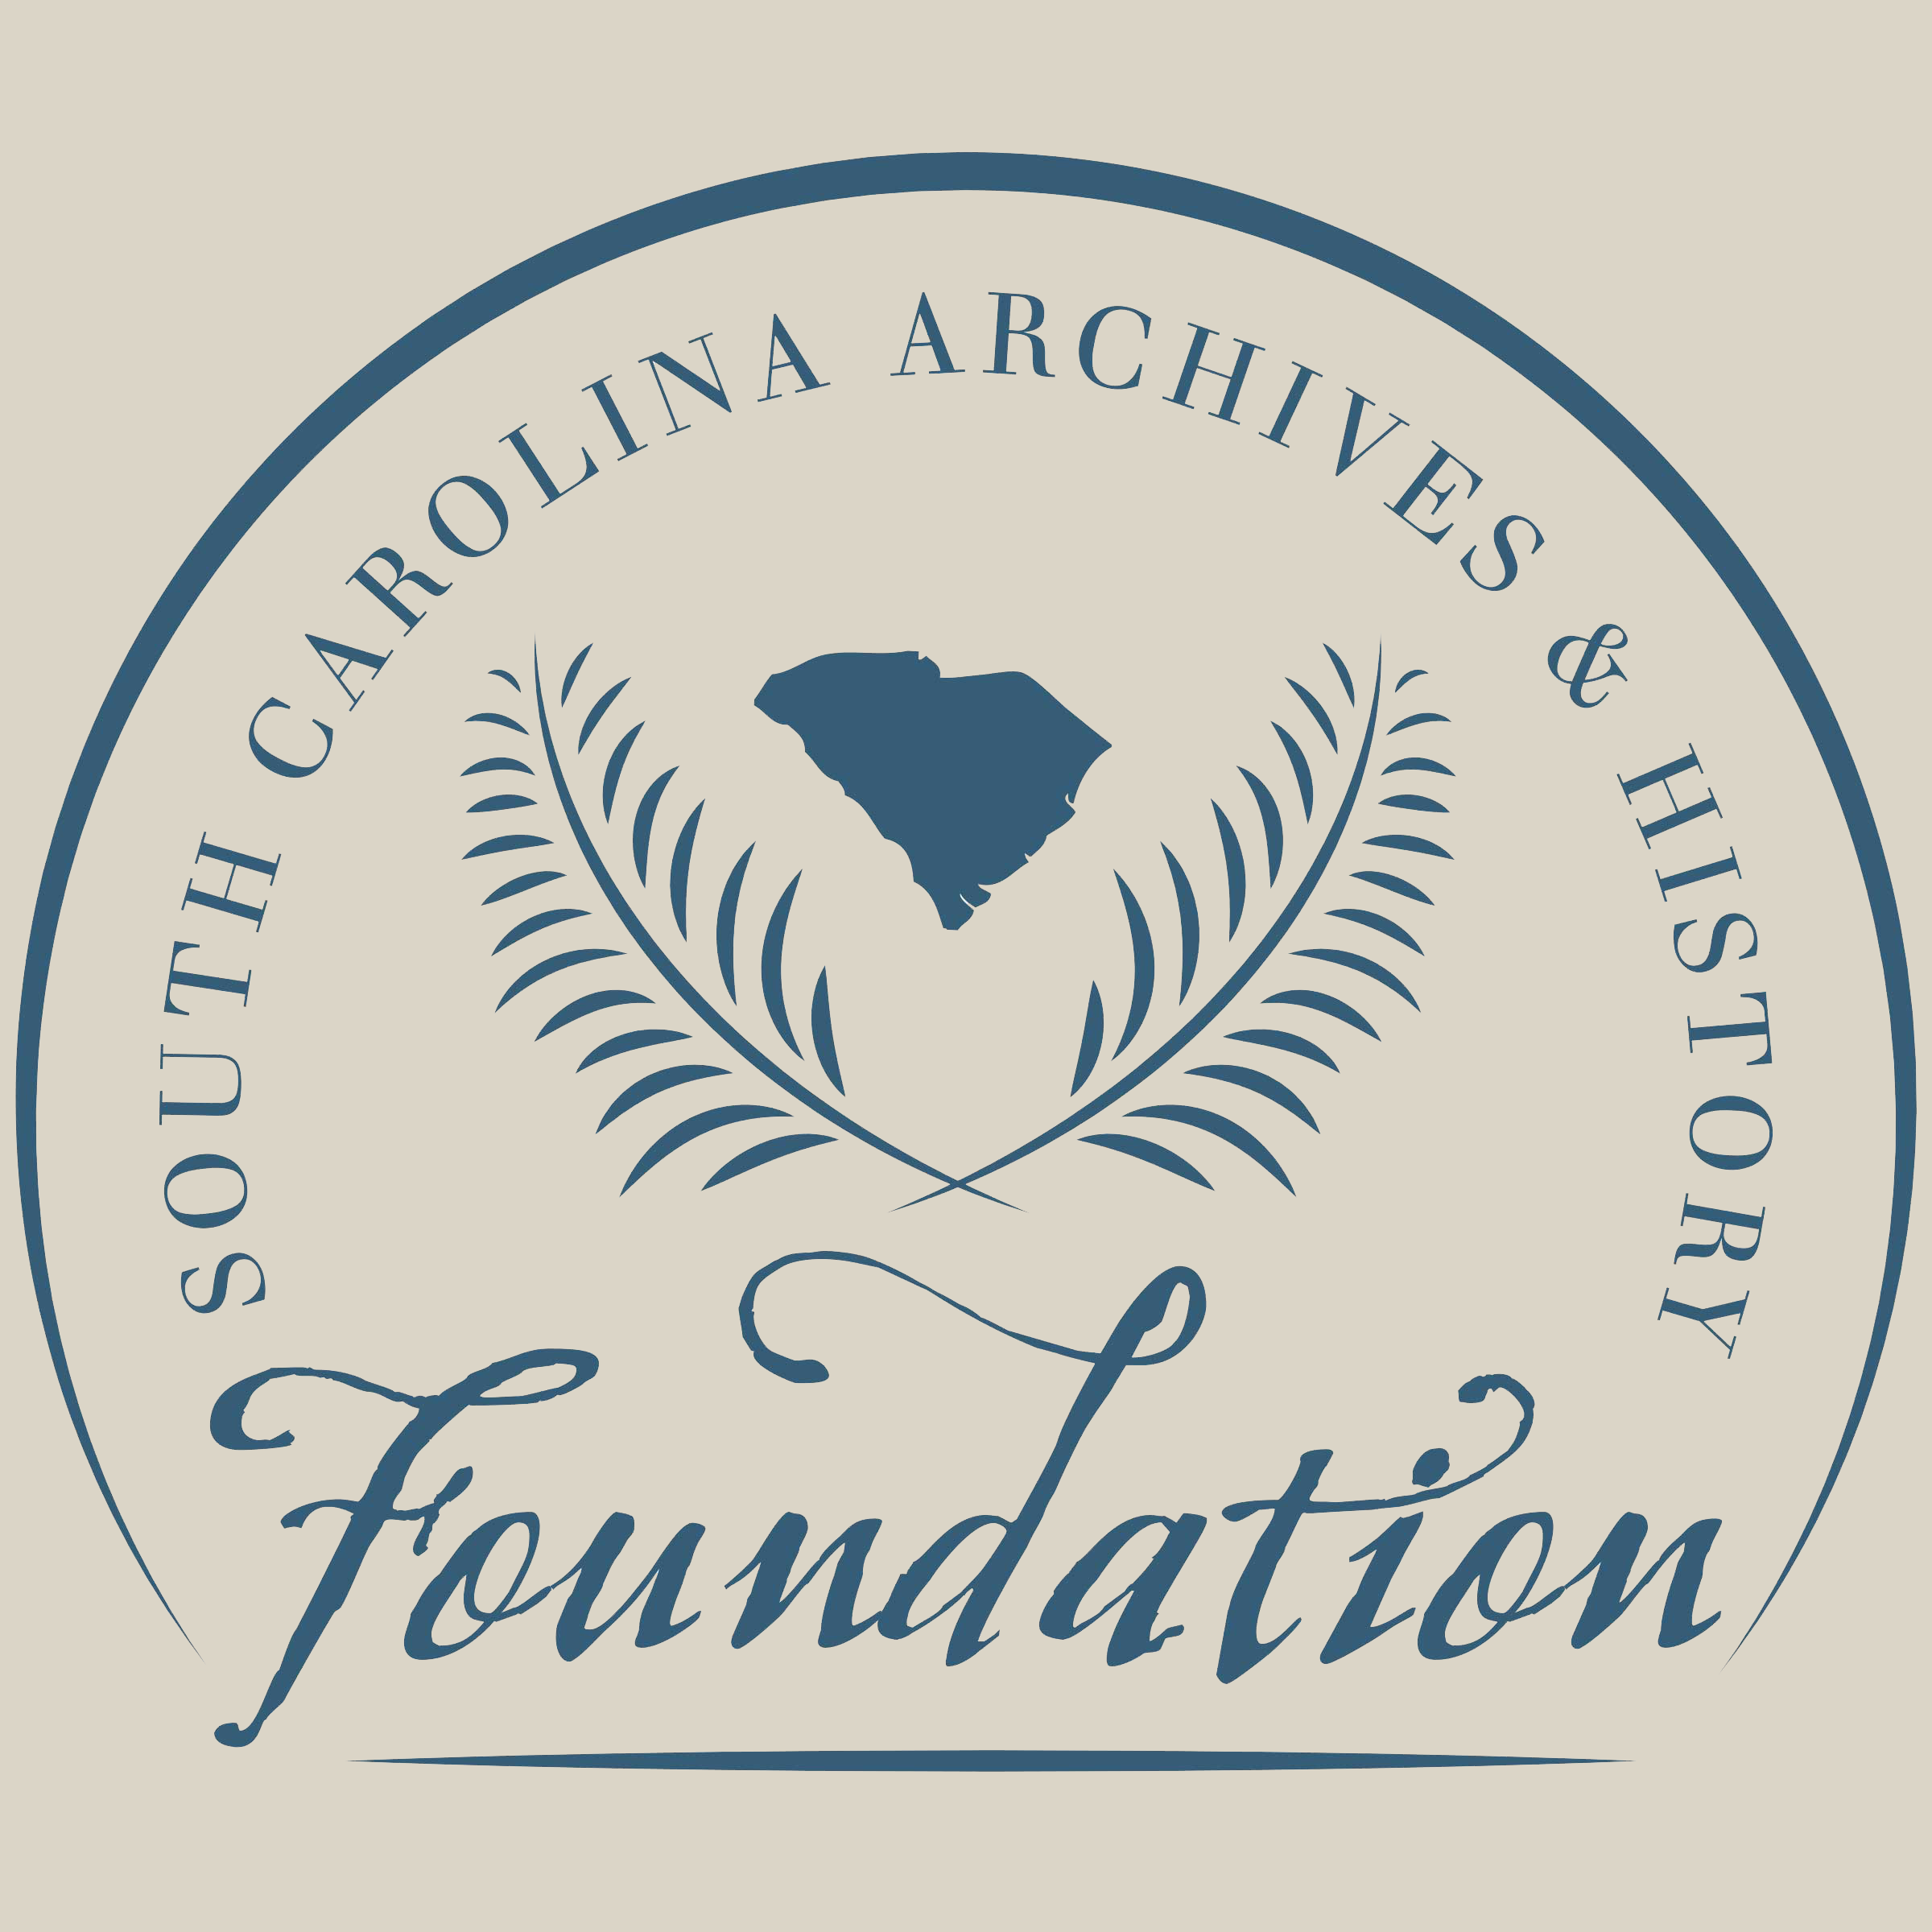 South Carolina Archives and History Foundation